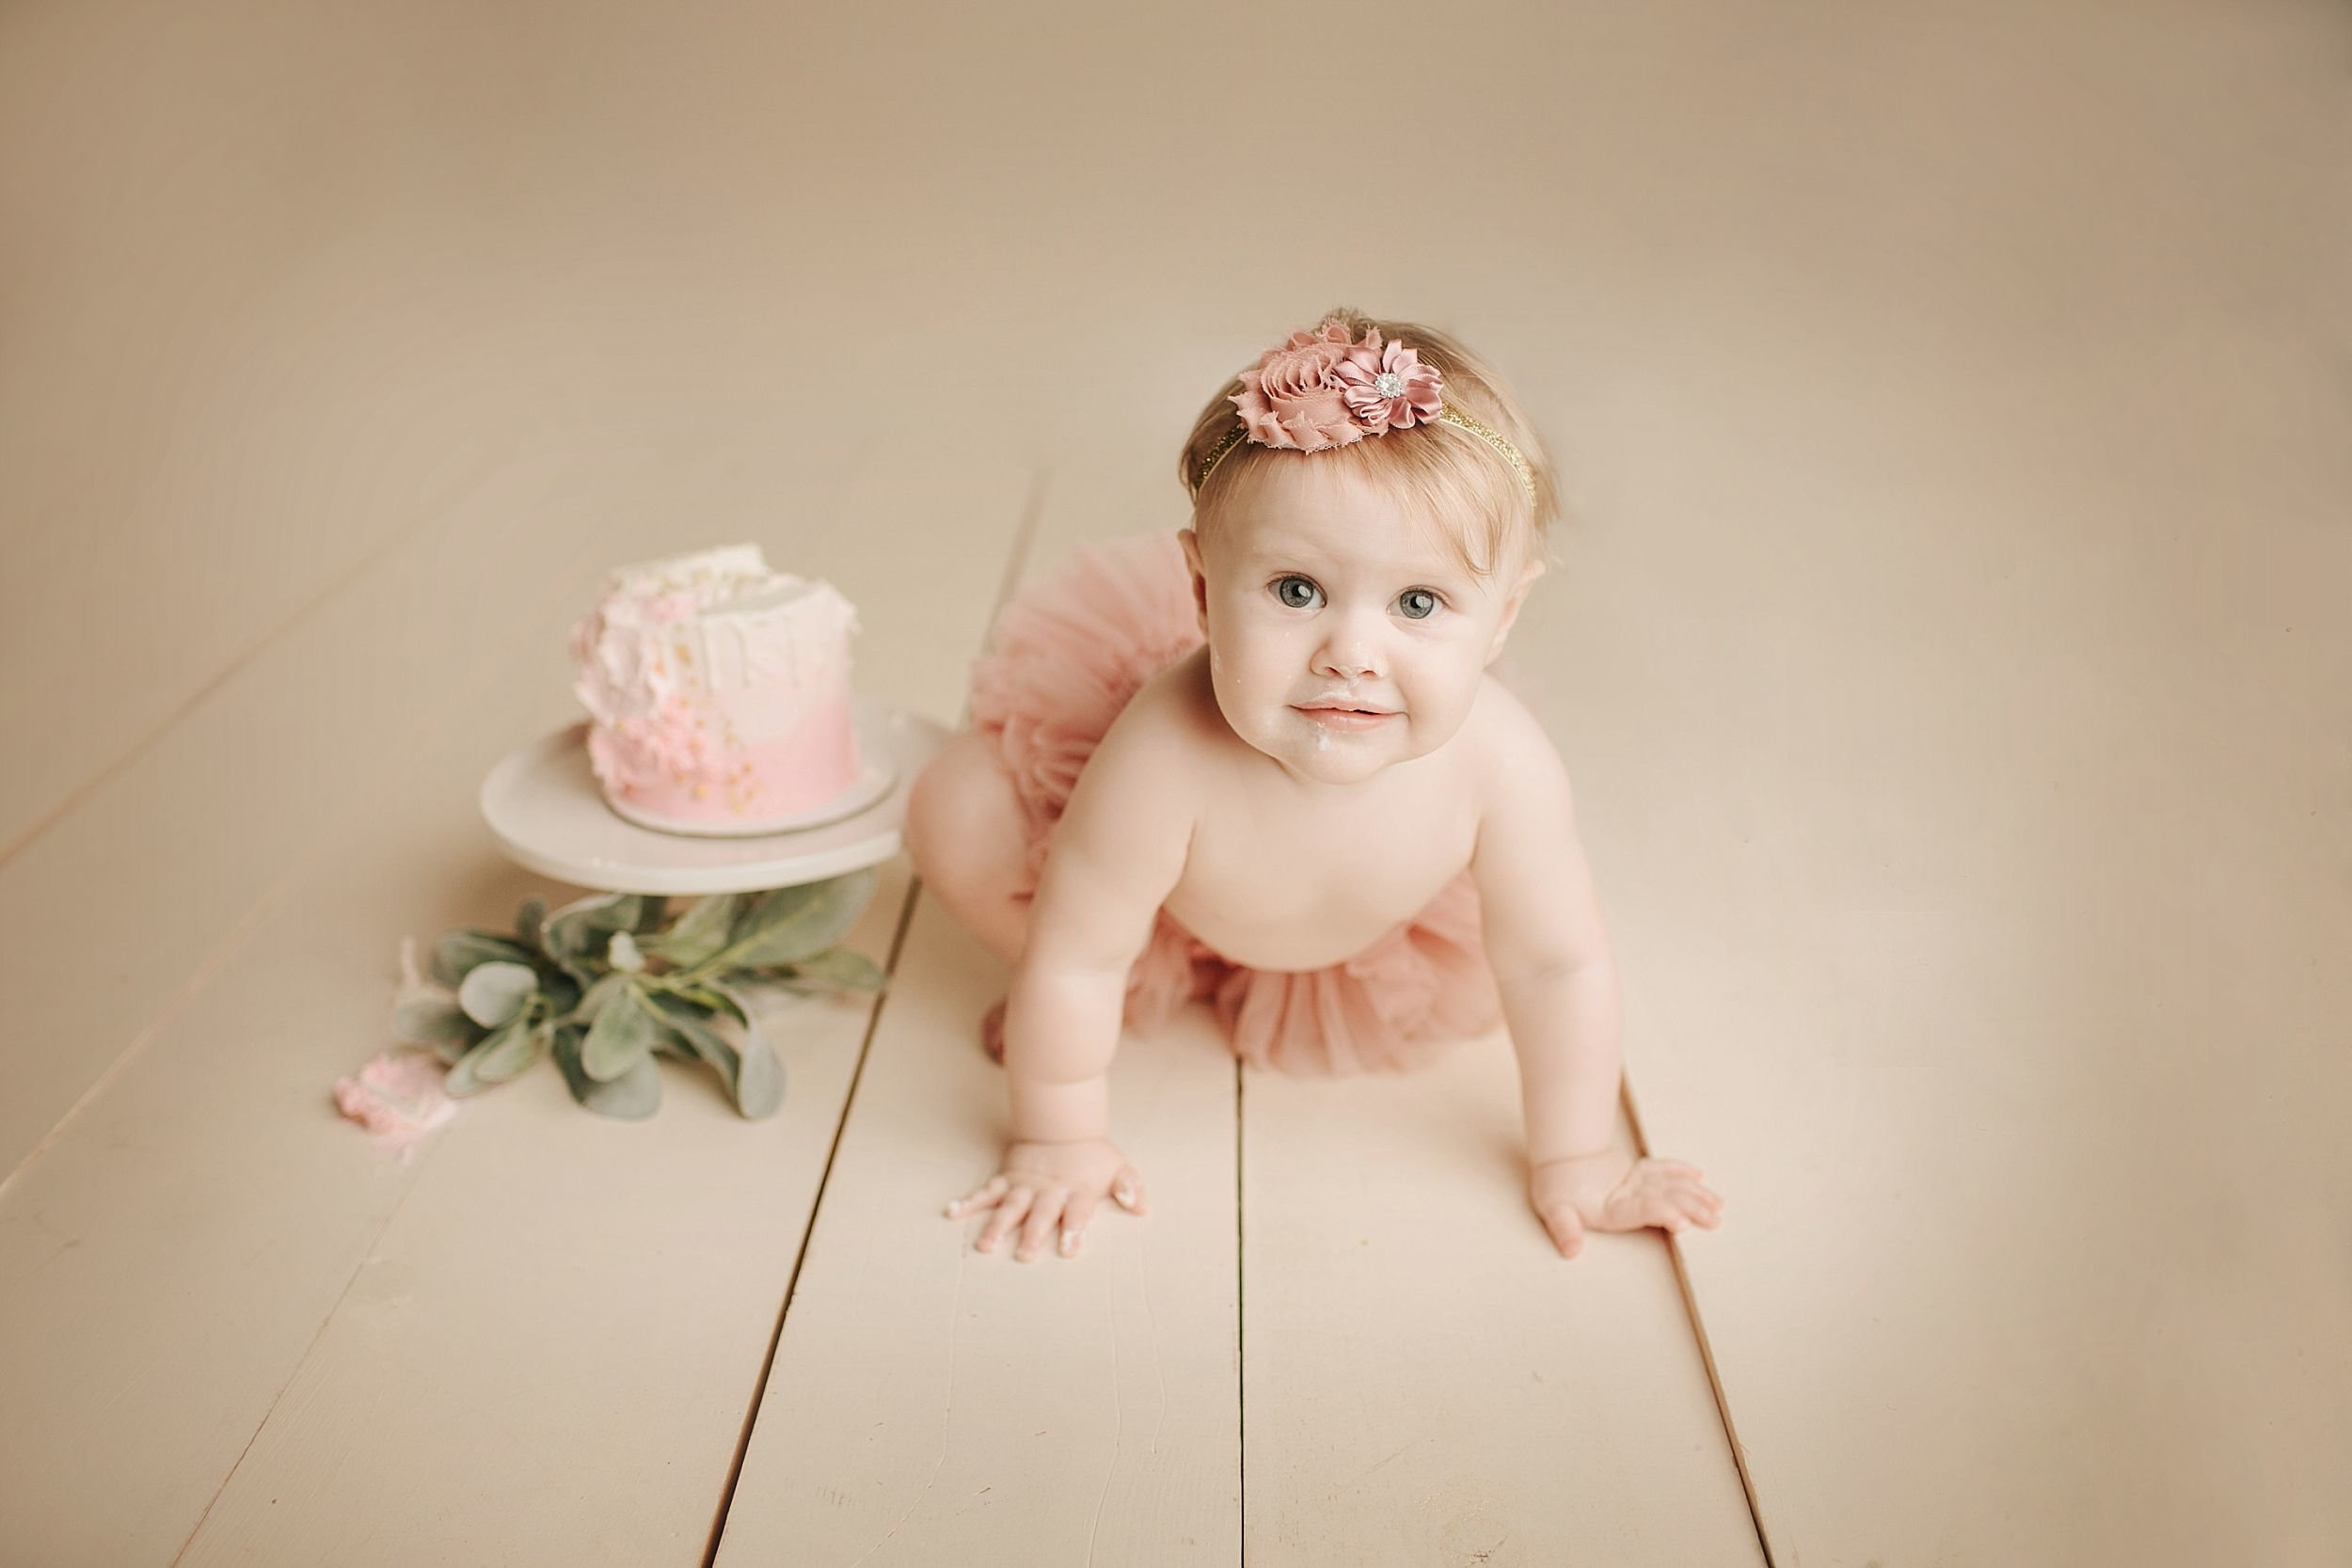 Baby sitting next to cake for cake smash portraits